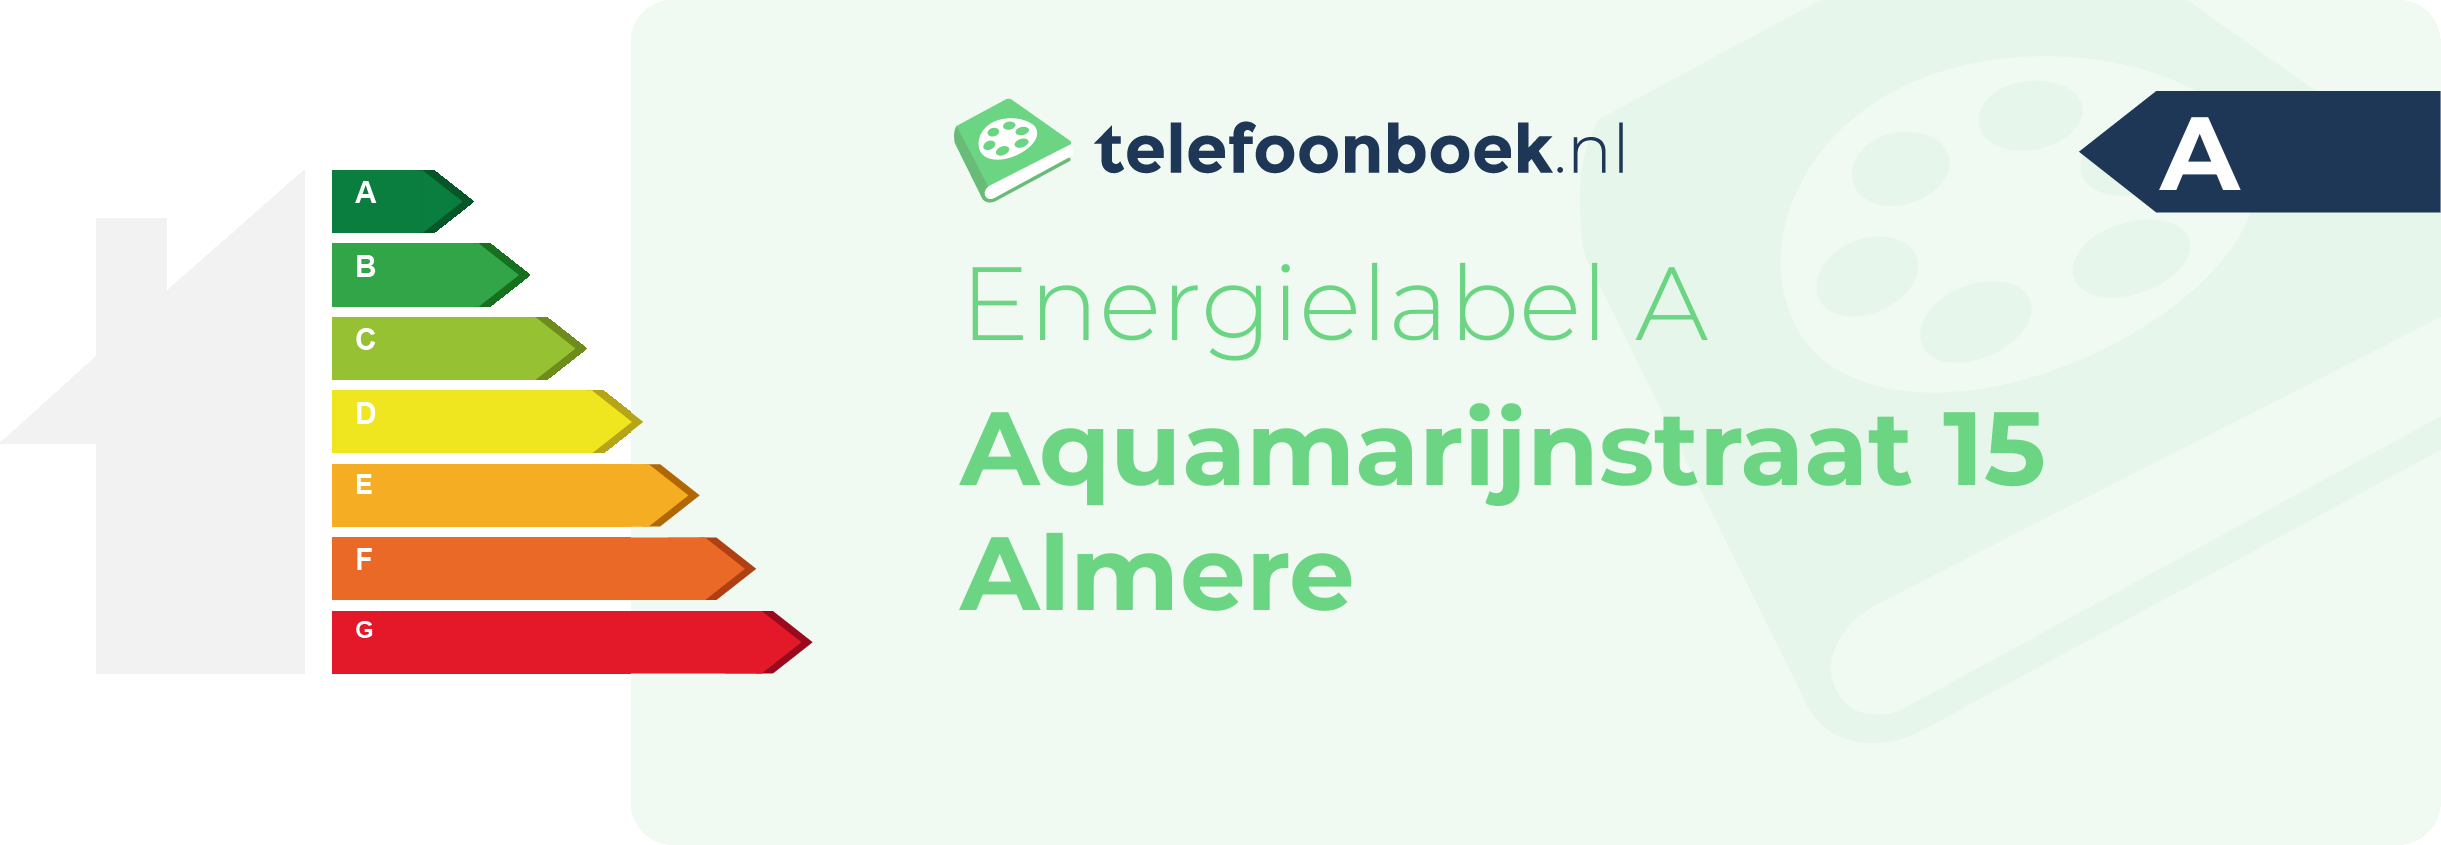 Energielabel Aquamarijnstraat 15 Almere